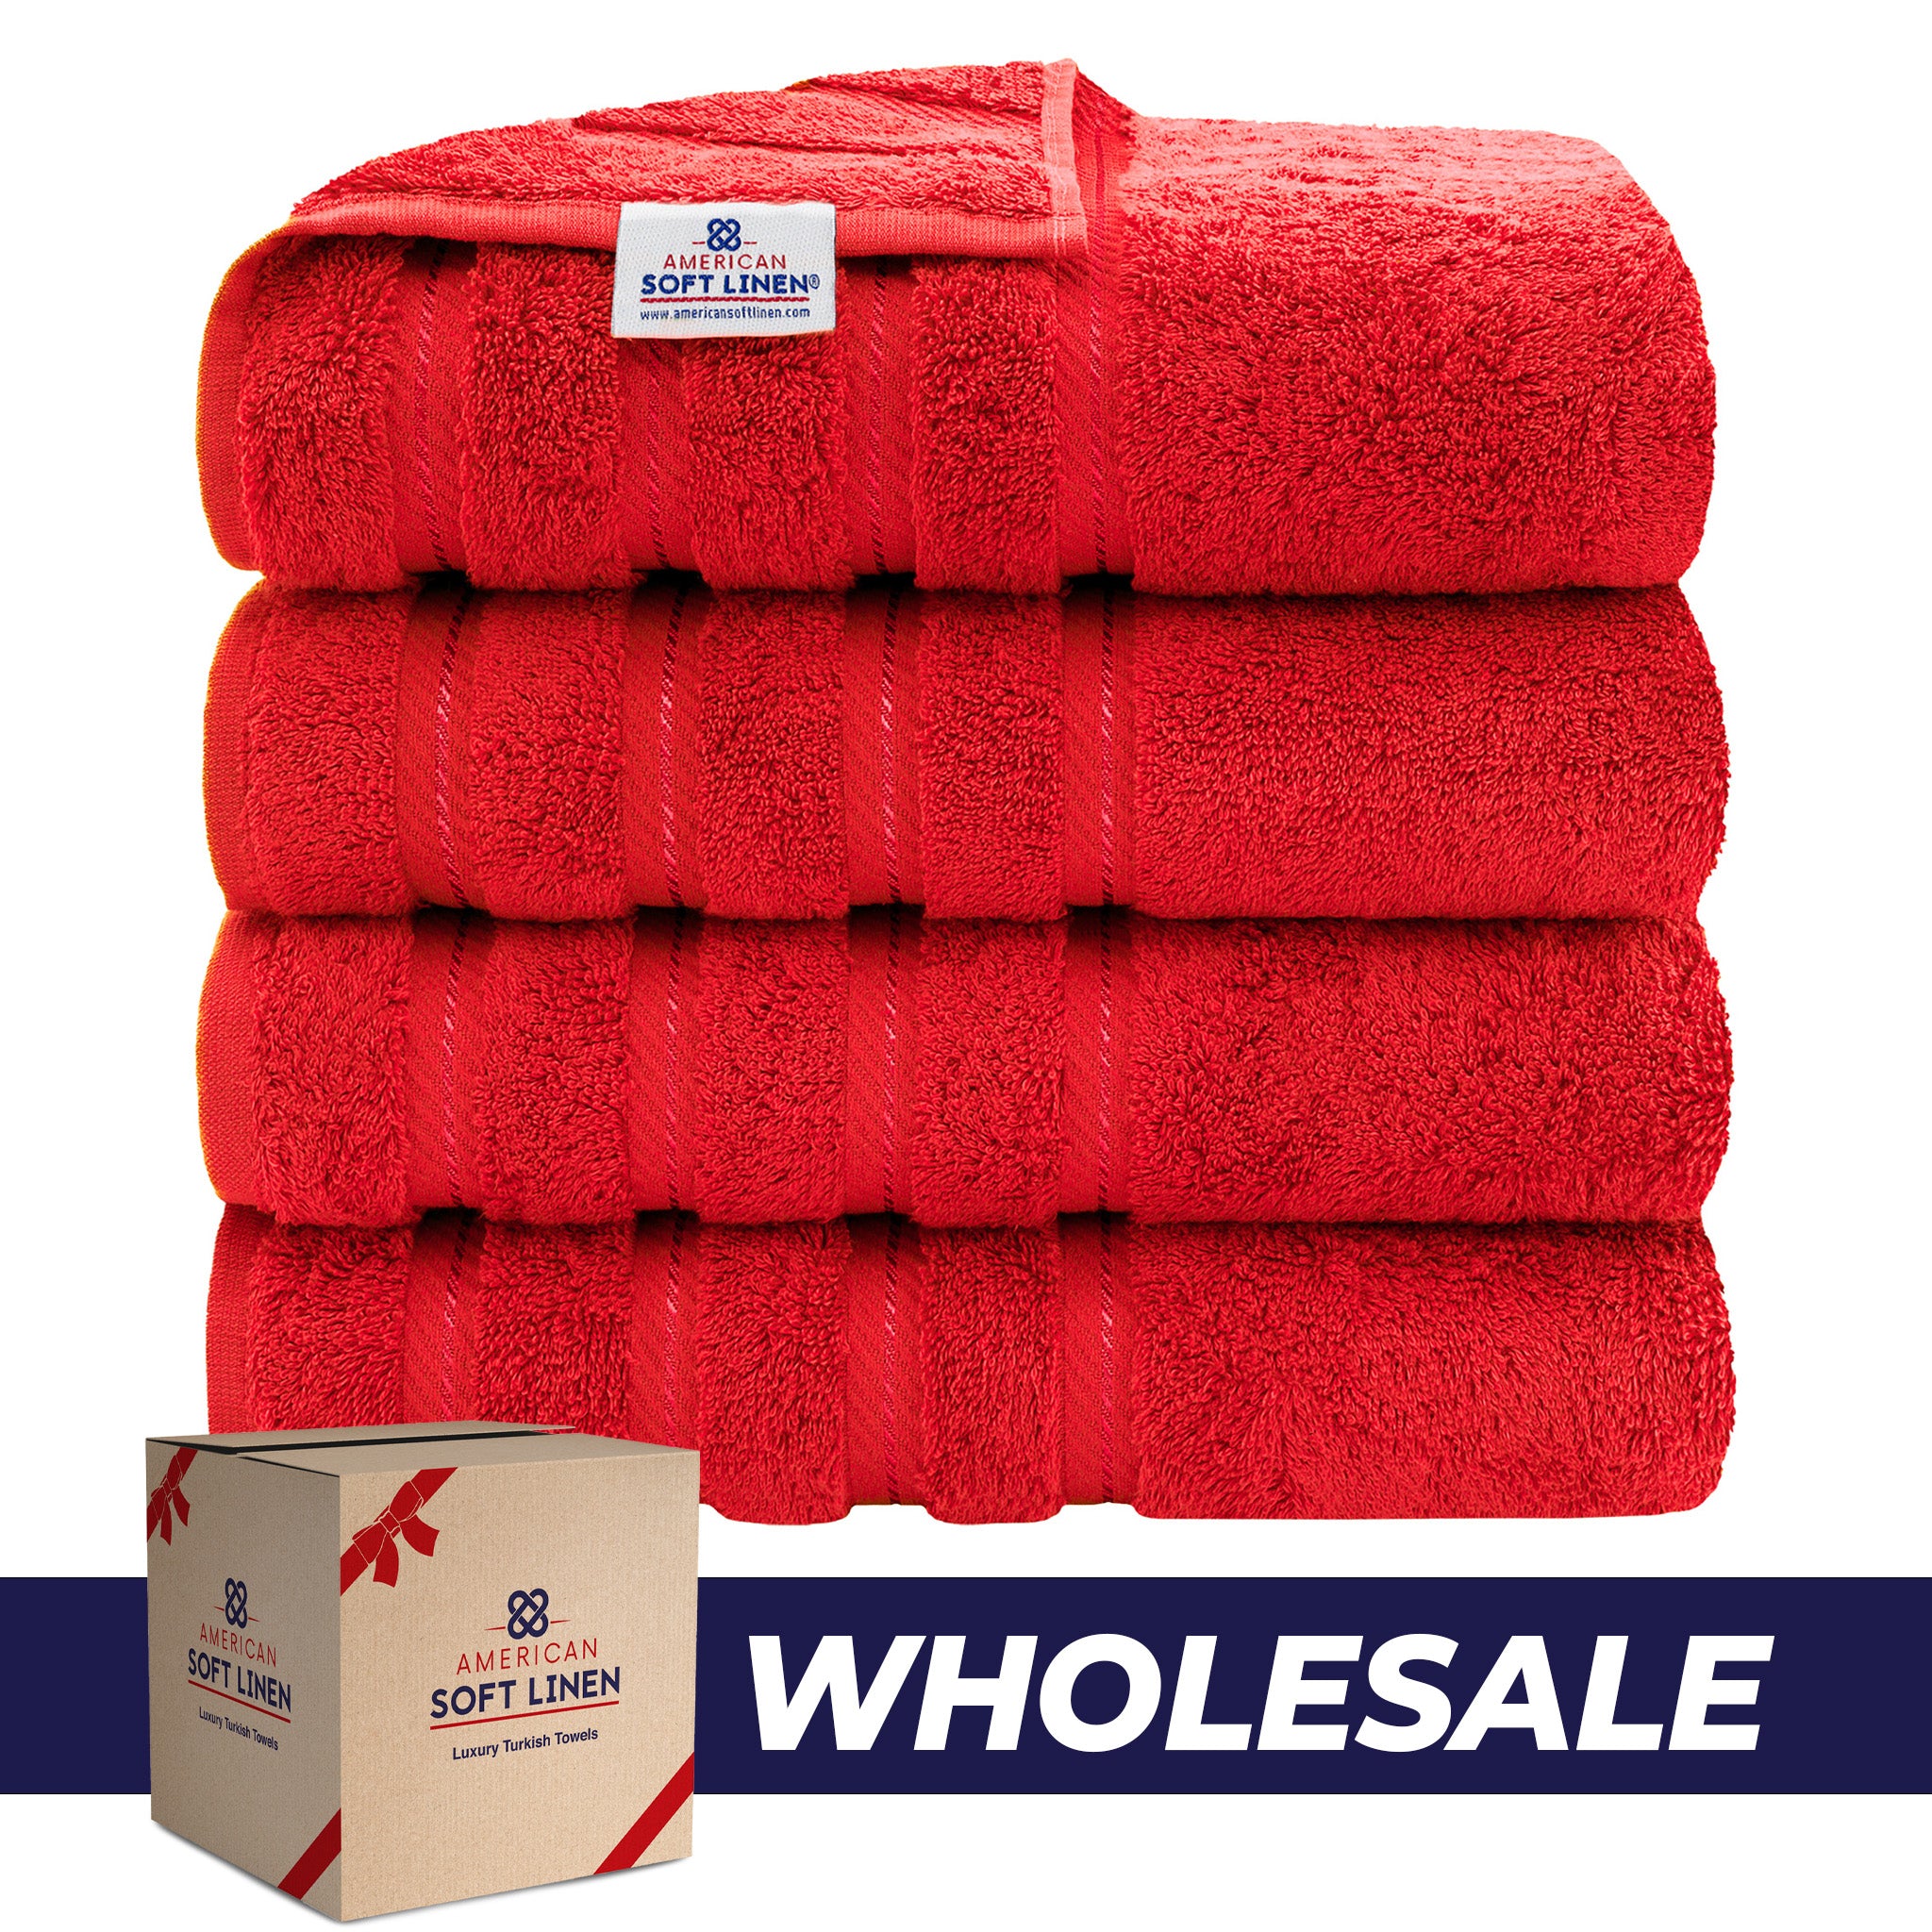 American Soft Linen 100% Turkish Cotton 4 Pack Bath Towel Set Wholesale red-0